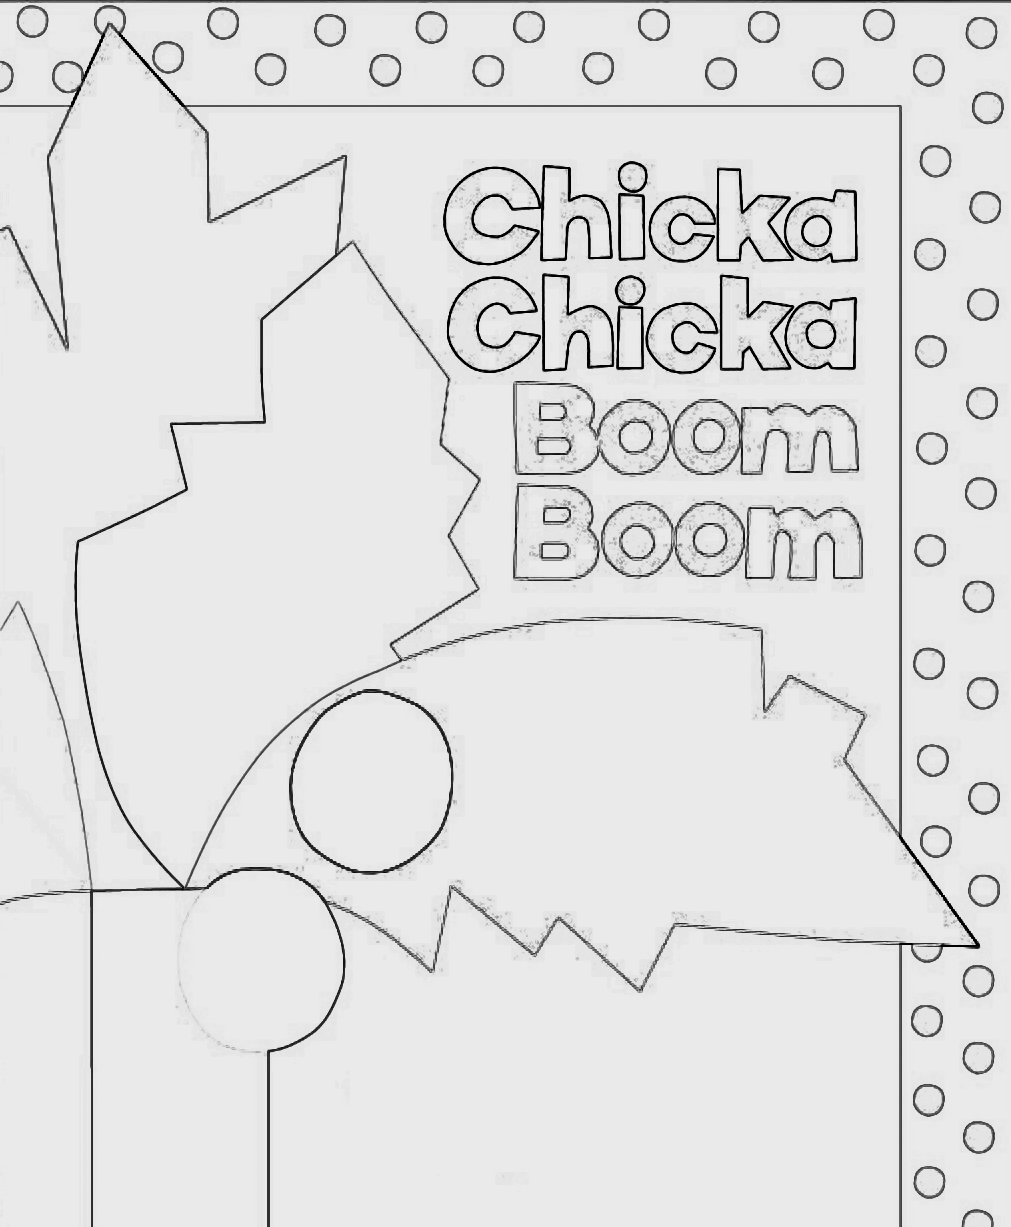 Chicka Chicka Boom Boom Coloring Page